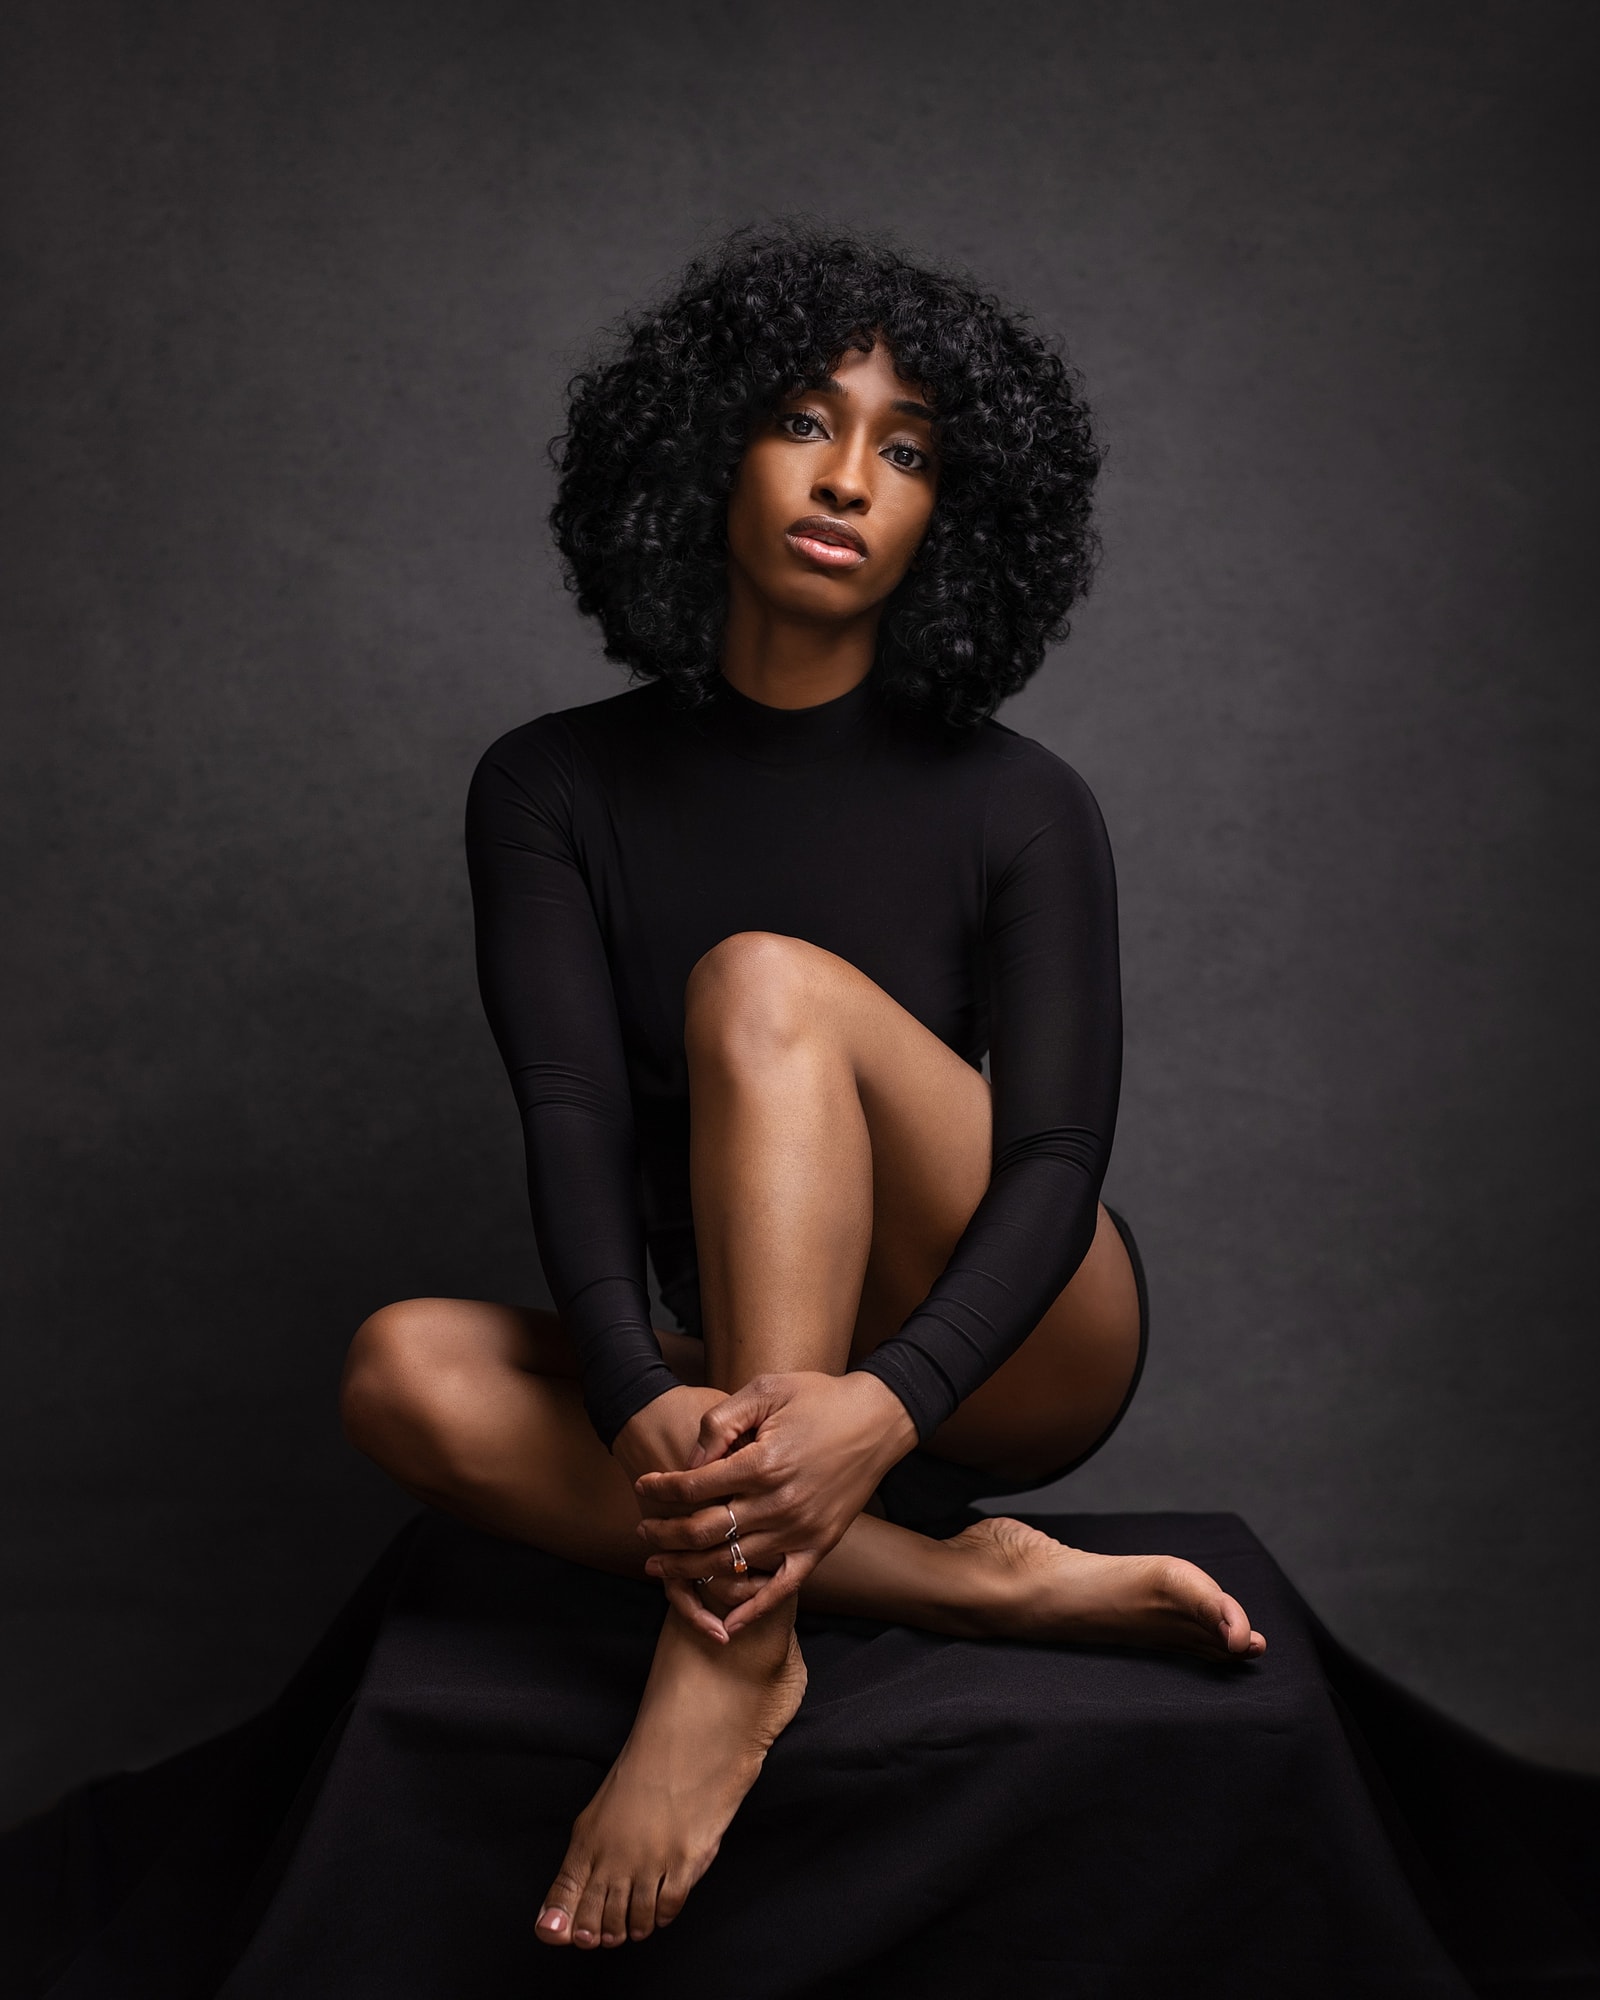 Black female modeling portfolio hi-res stock photography and images - Alamy